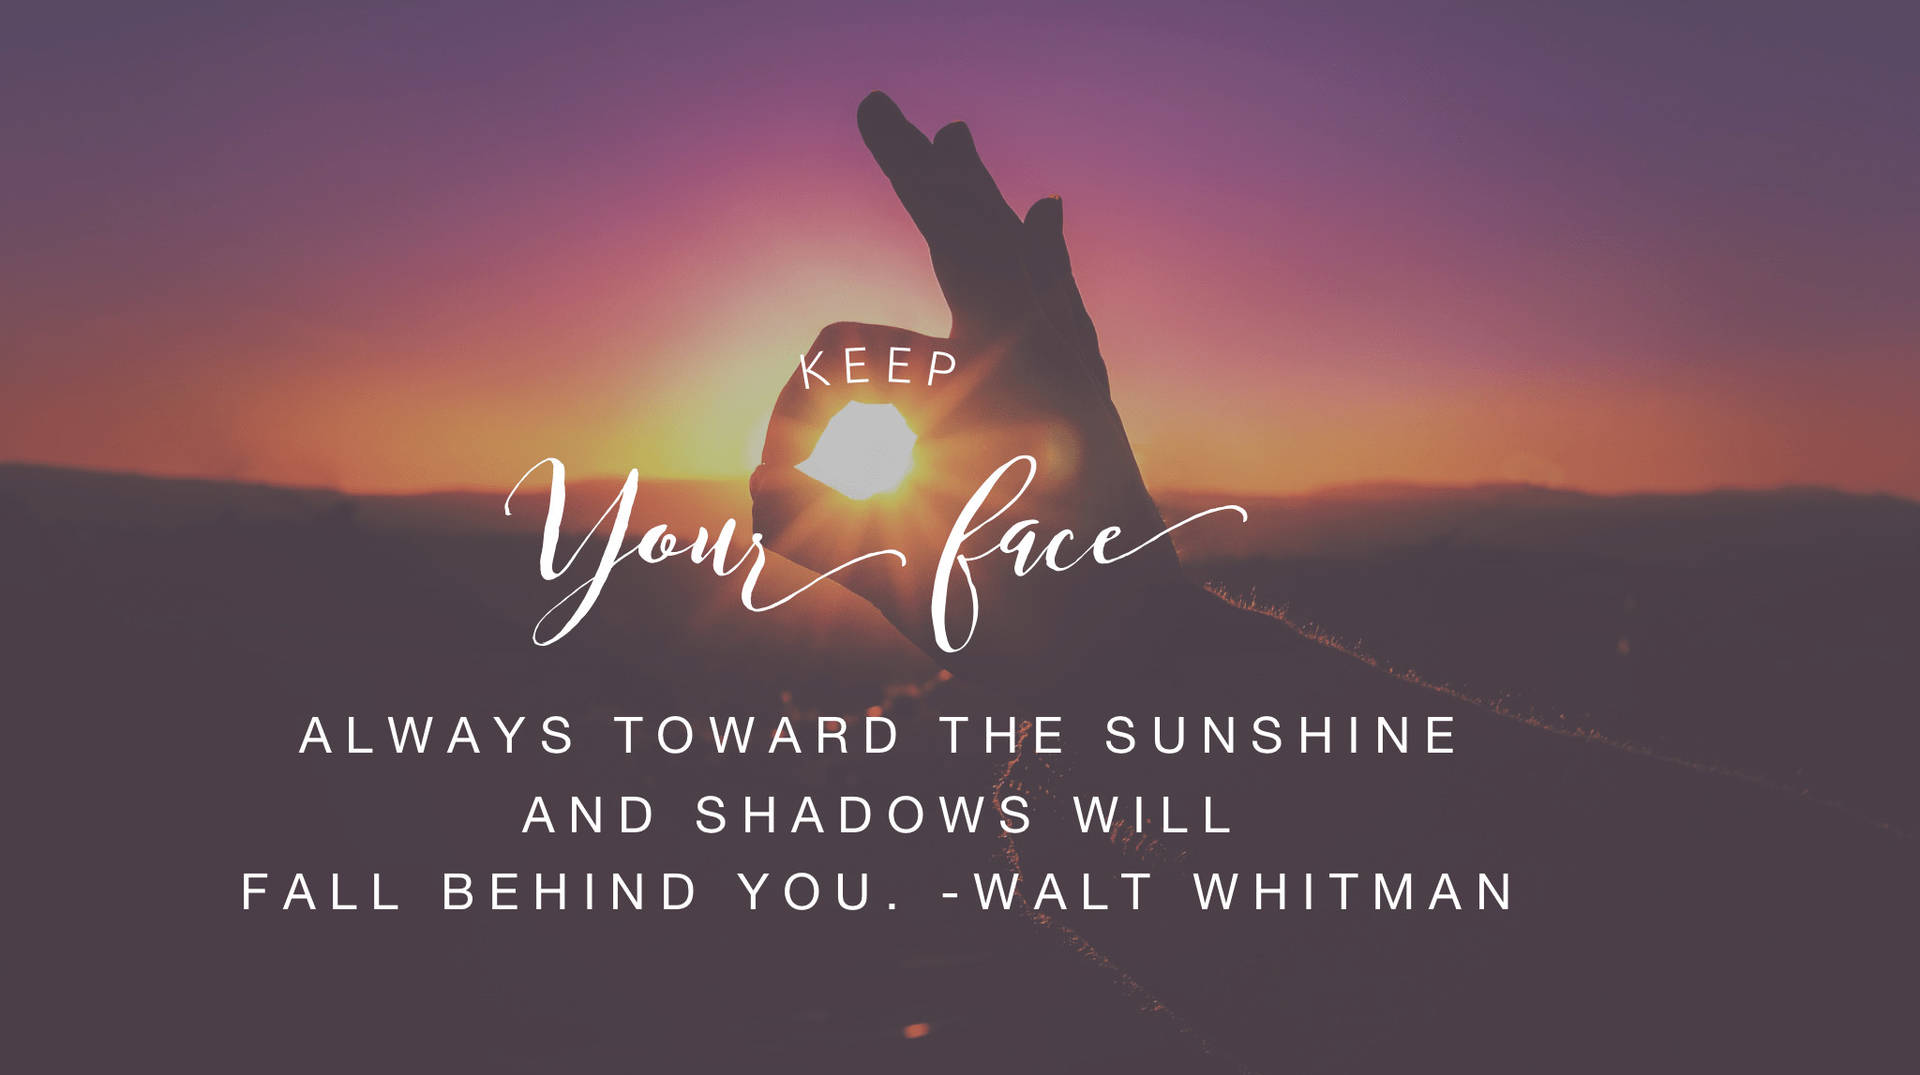 Walt Whitman Motivational Quotes